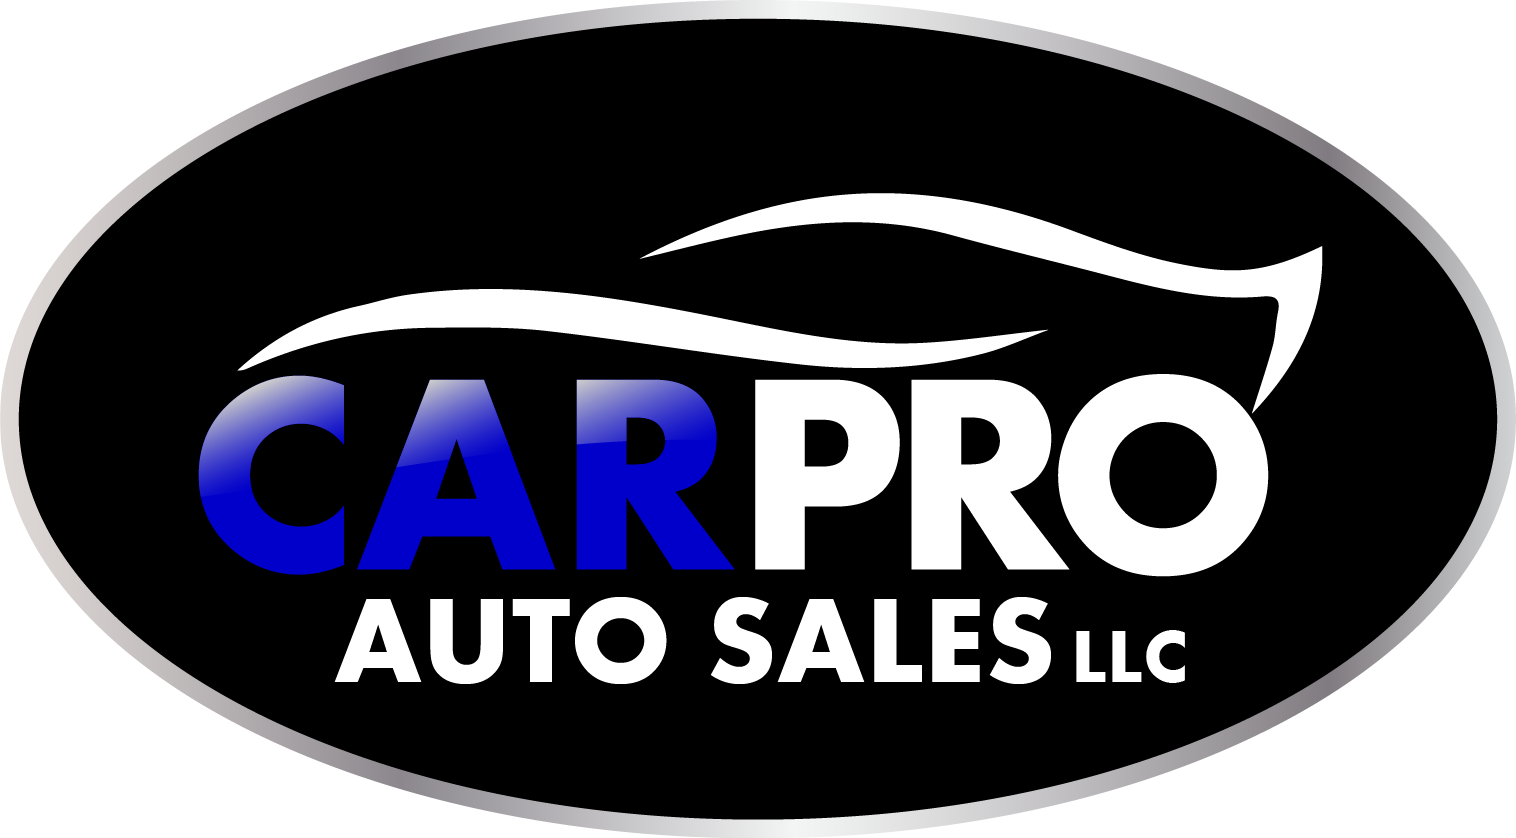 CarPro Auto Sales